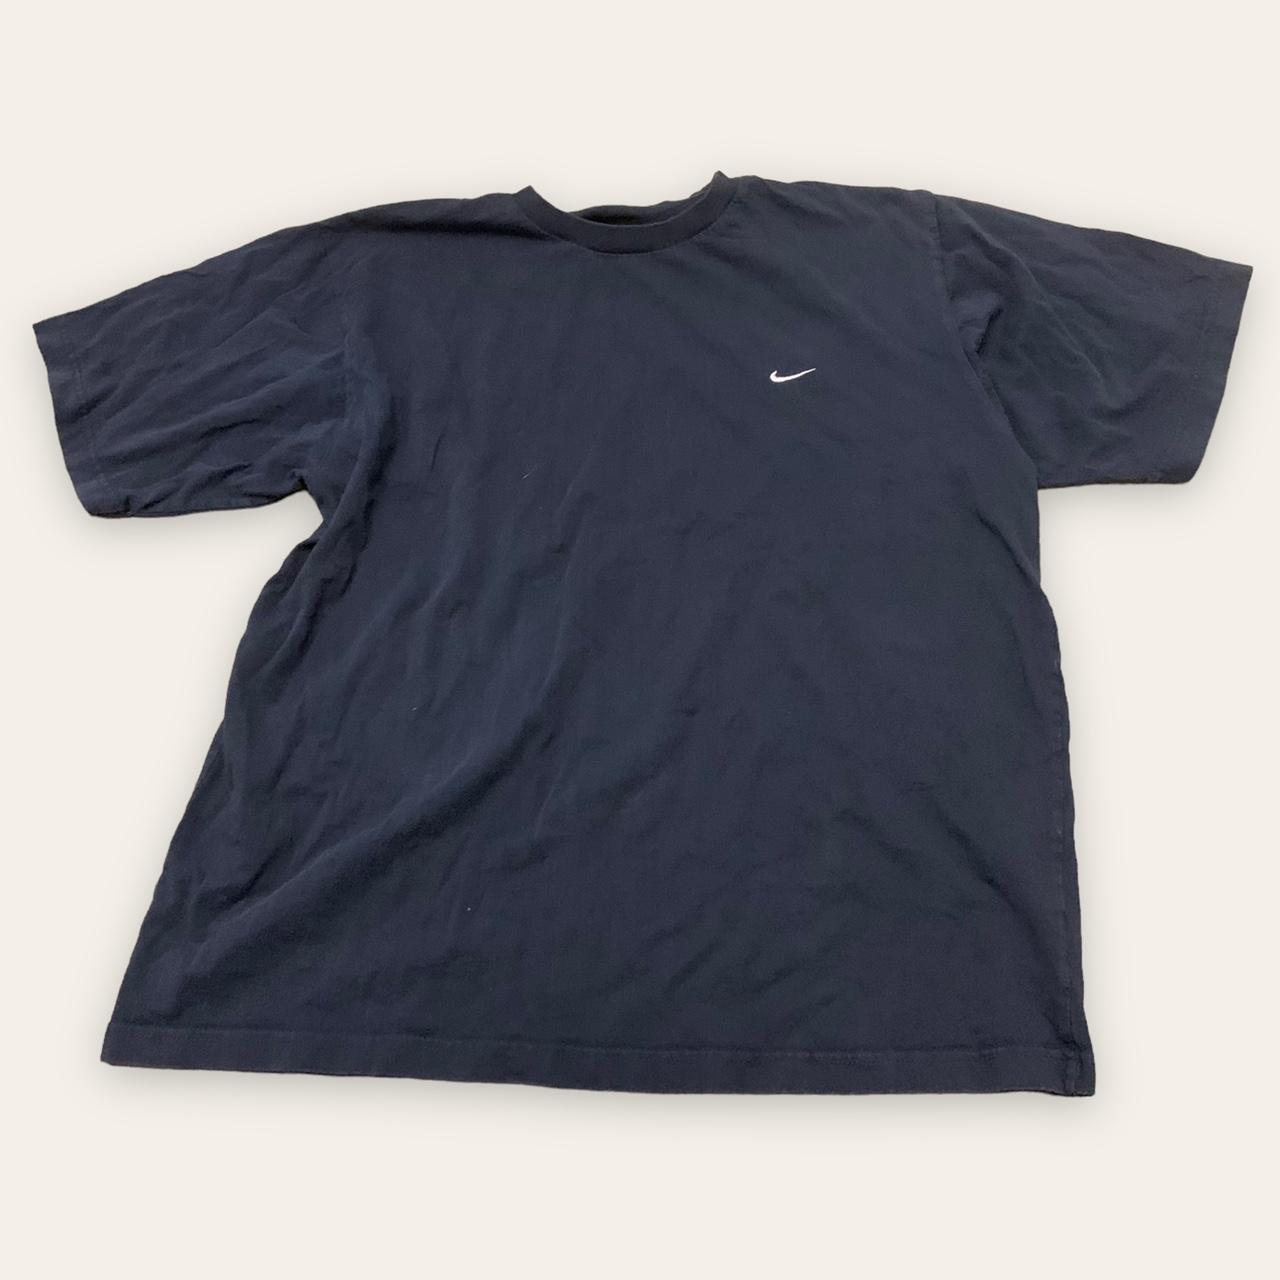 Nike Men's Navy T-shirt